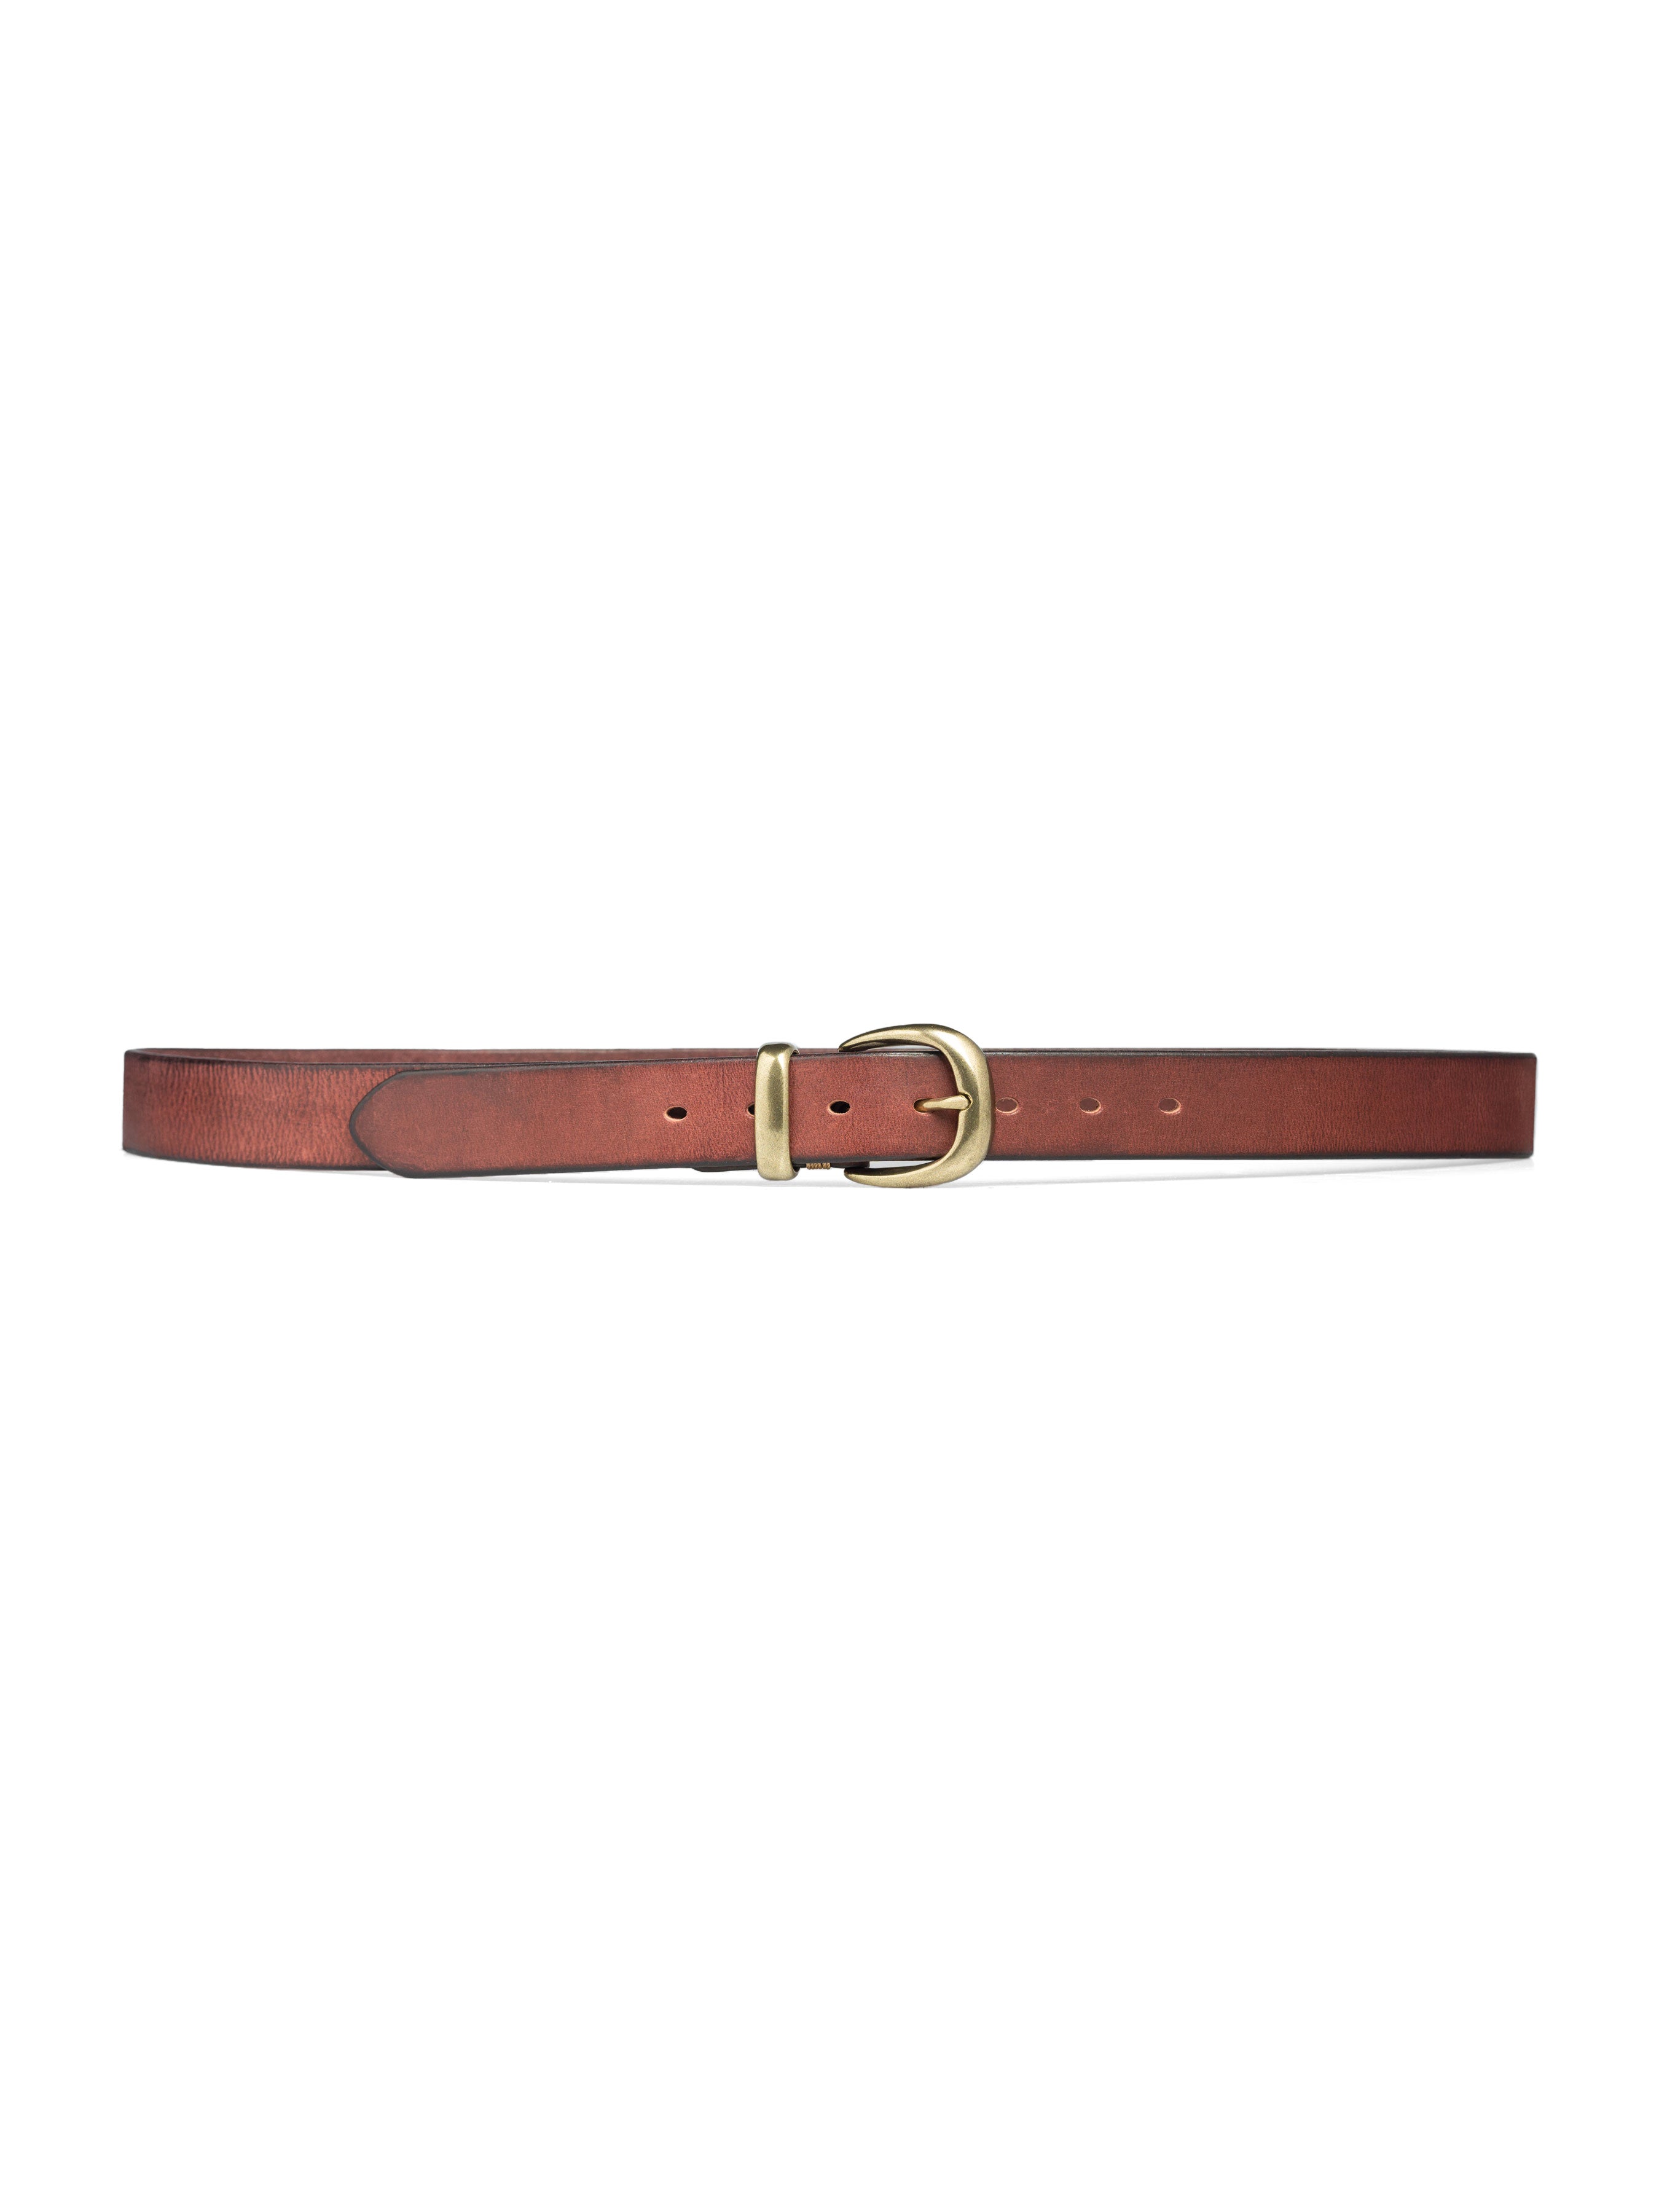 Italian Rustic Leather Belt with Horseshoe Gold-toned Buckle - Zeve Shoes